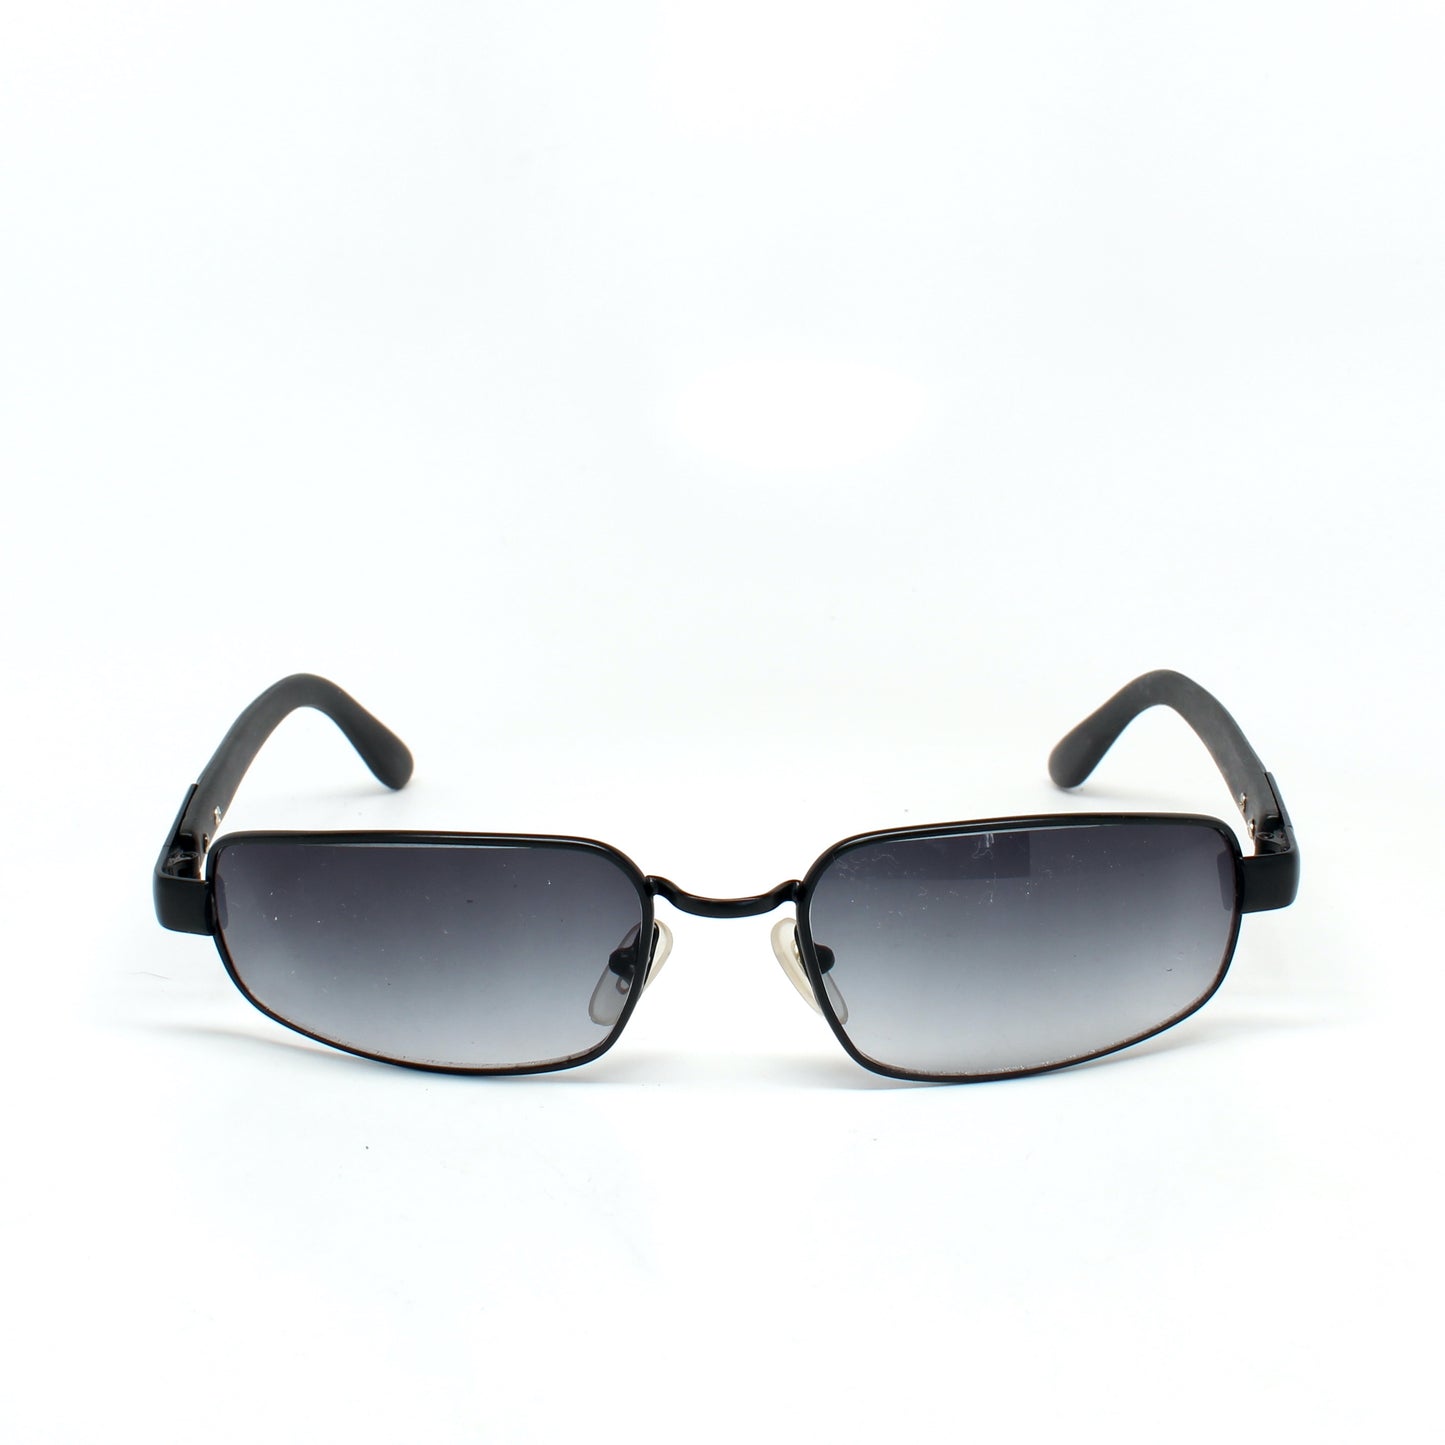 Vintage MINI Small Size 1996 Neo Rectangle Wire Frame Sunglasses - Black